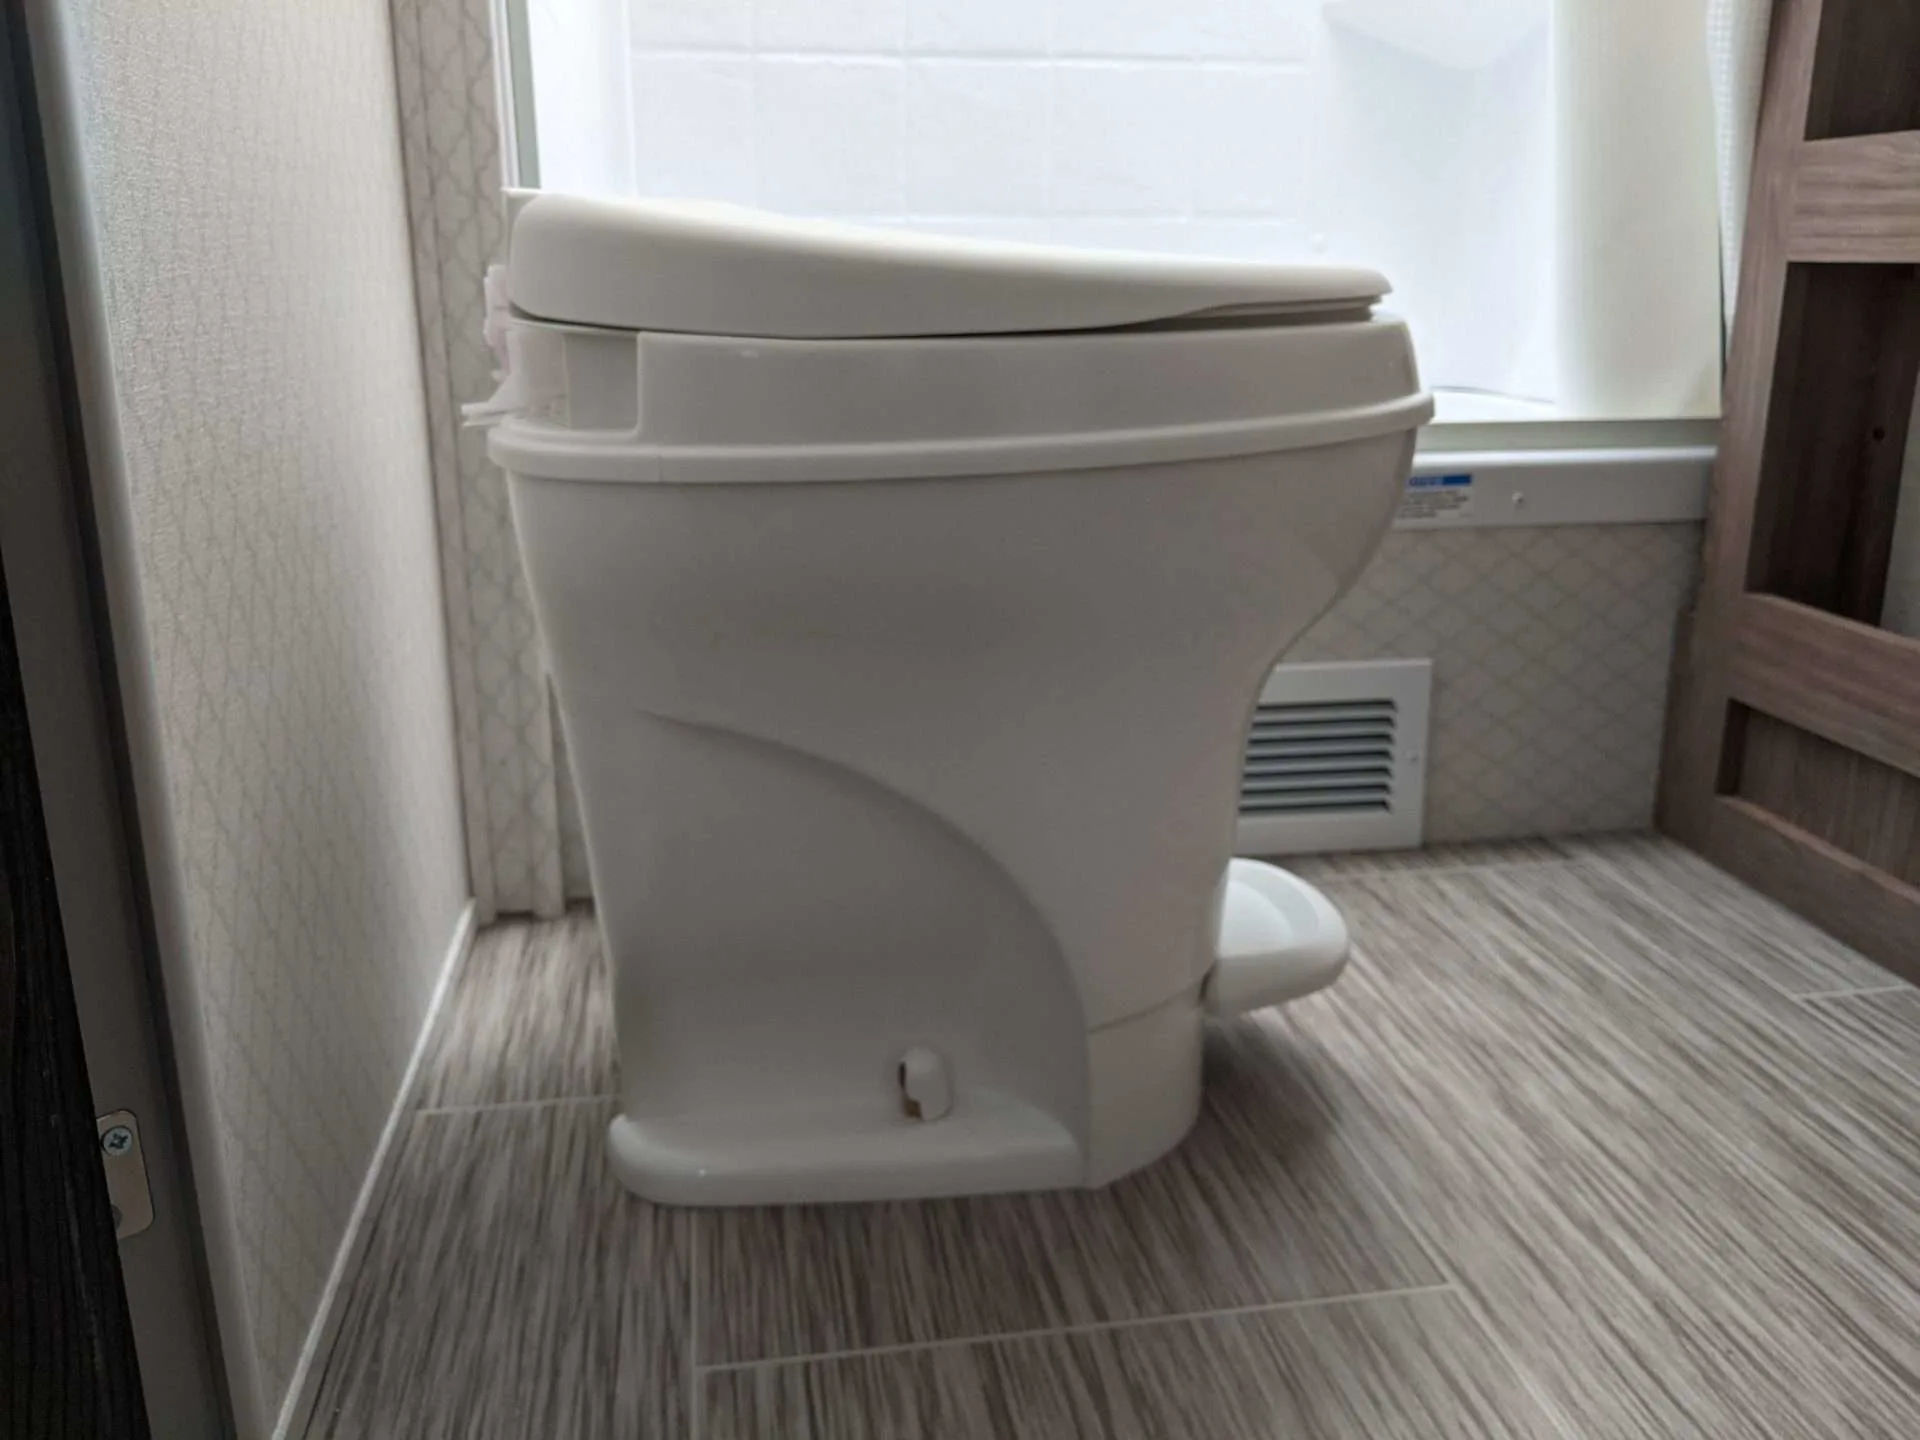 RV pedal-flush toilet